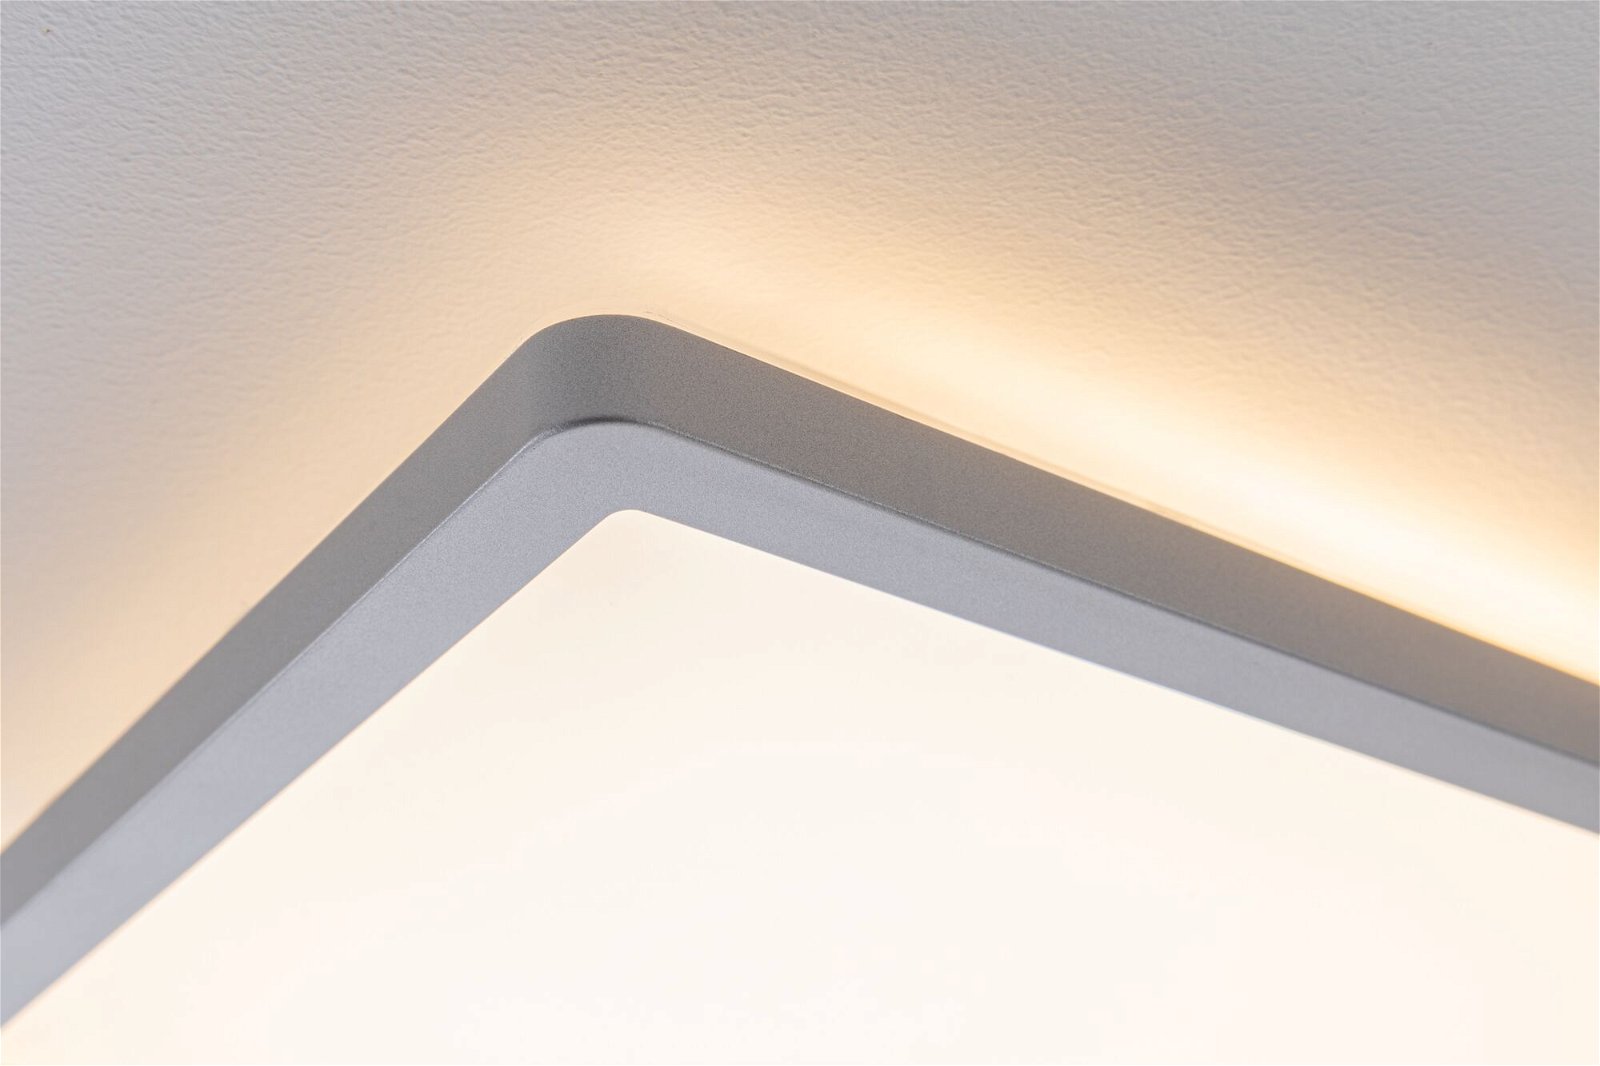 LED Panel Atria Shine Backlight square 293x293mm 16W 1600lm 3000K Chrome matt